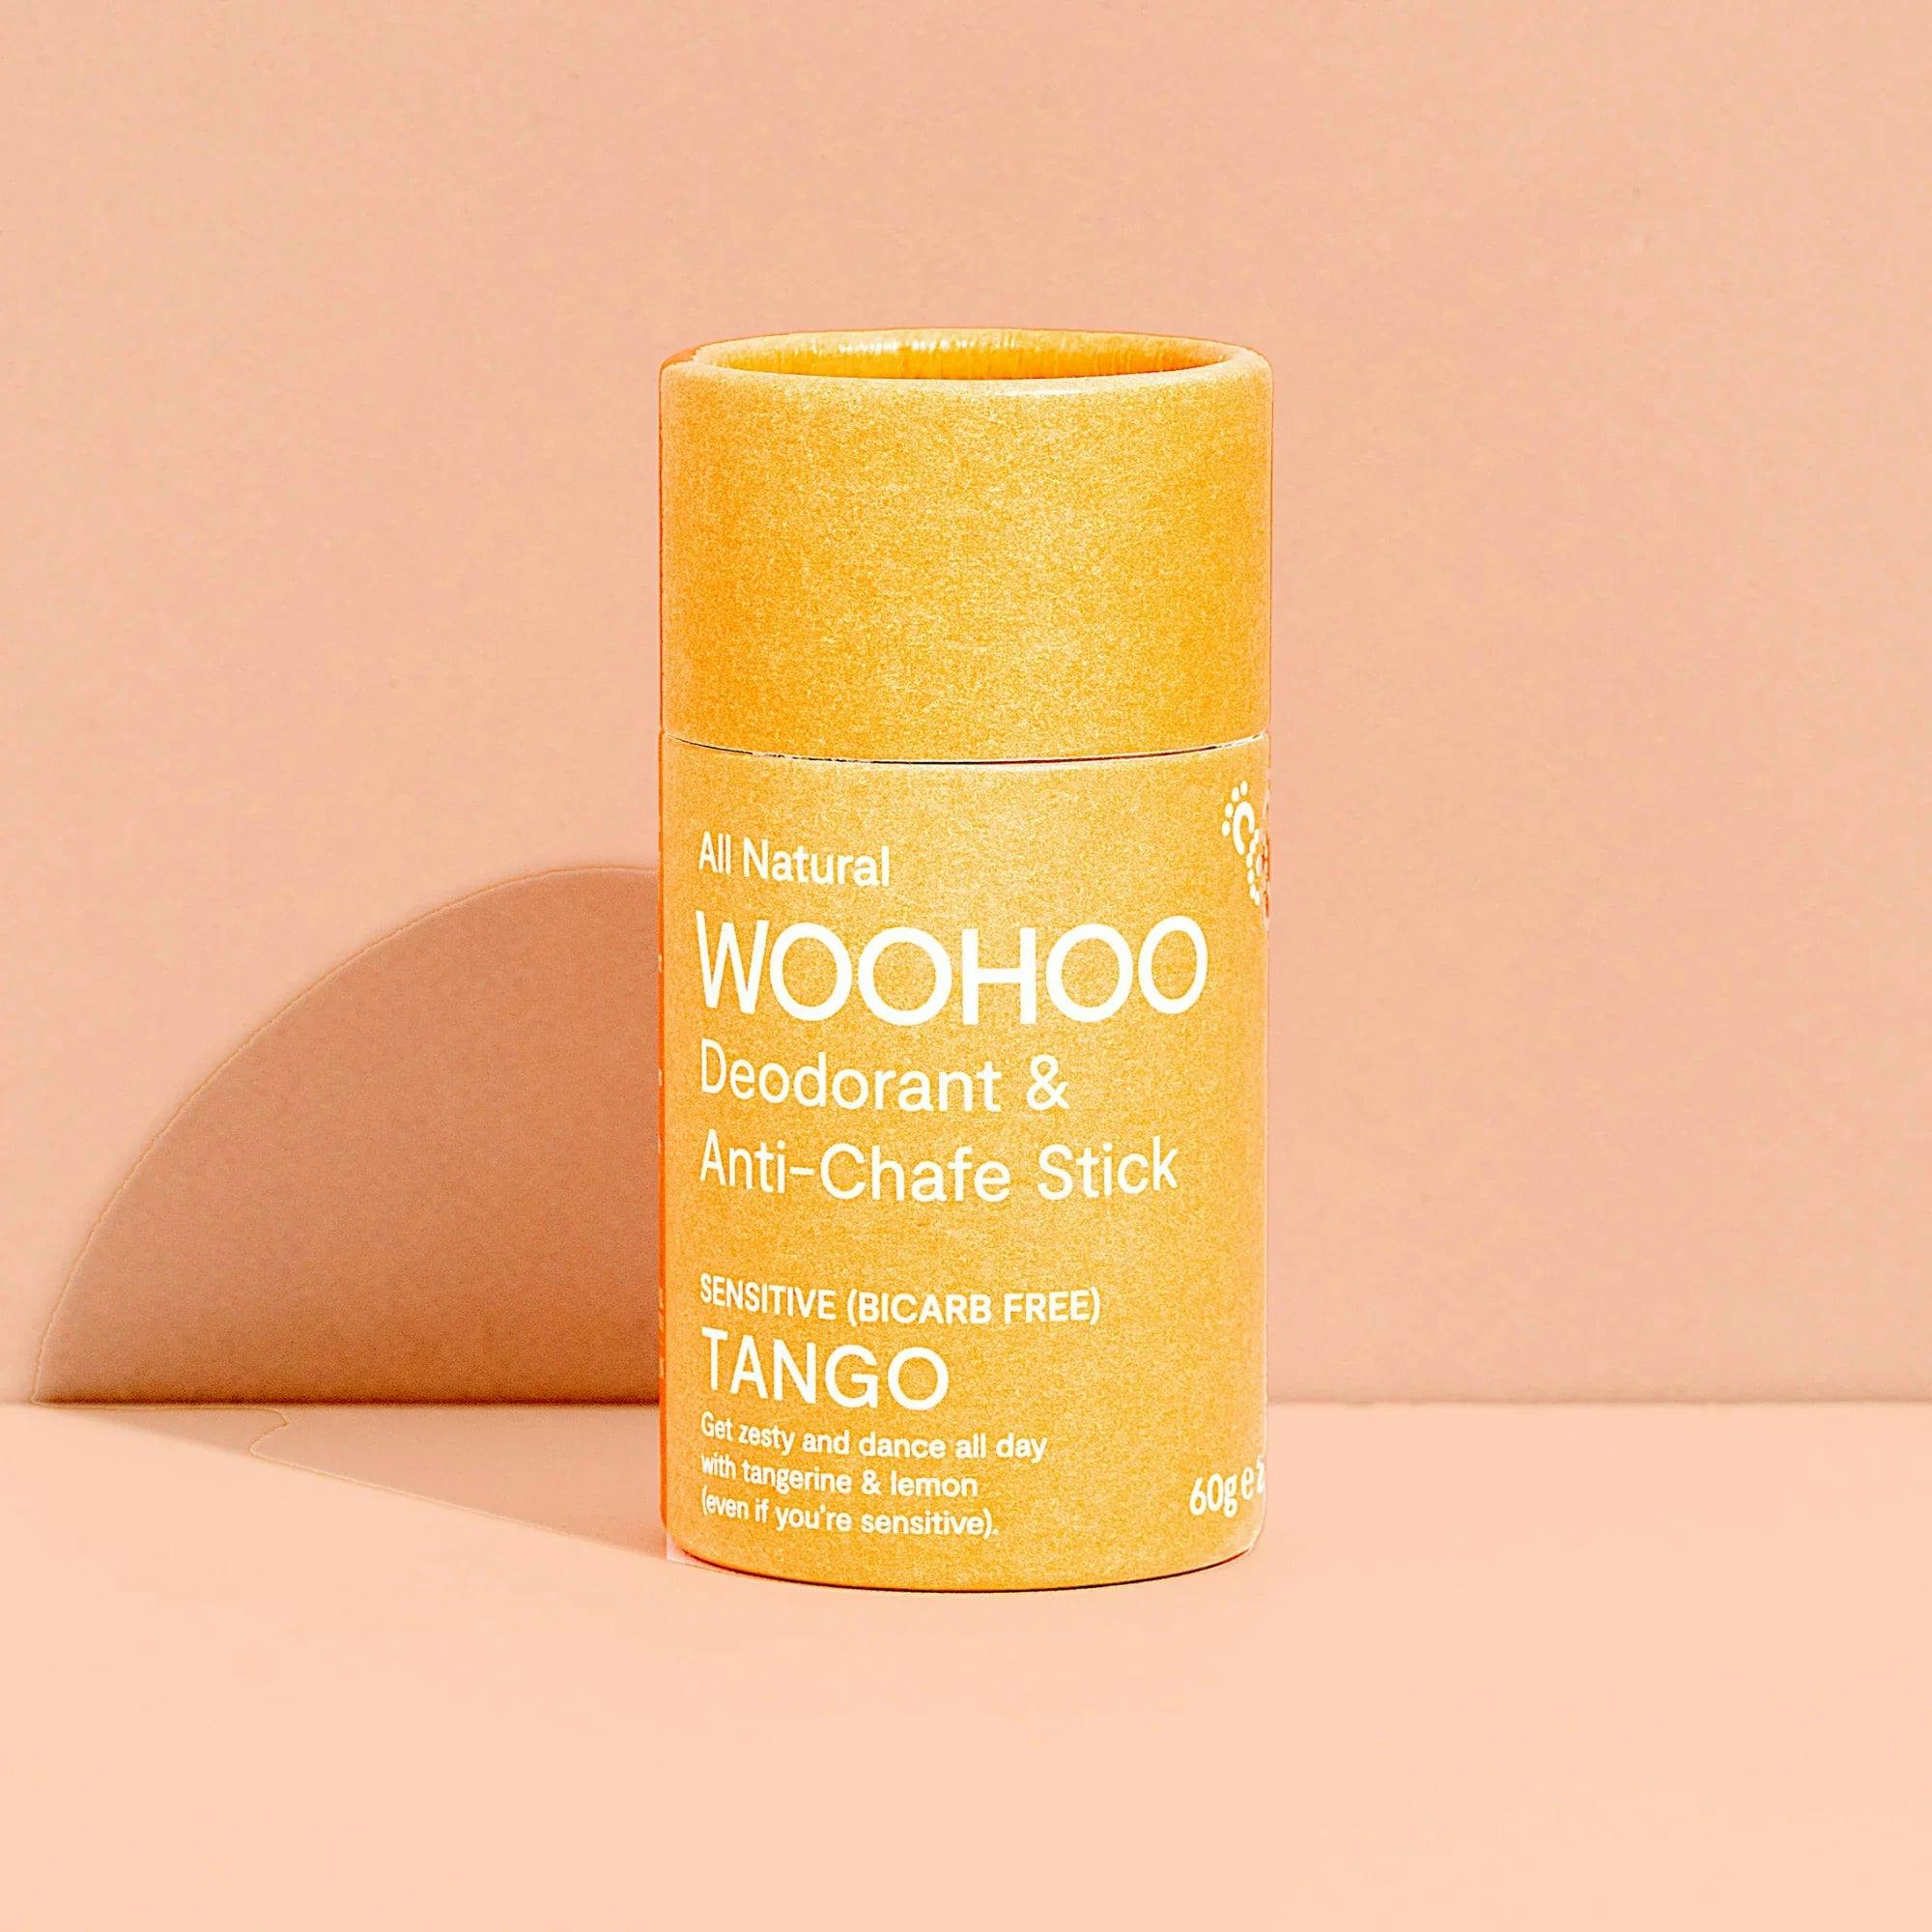 WOOHOO Deodorant & Anti-Chafe Stick Tango (Sensitive Bicarb Free) 60g